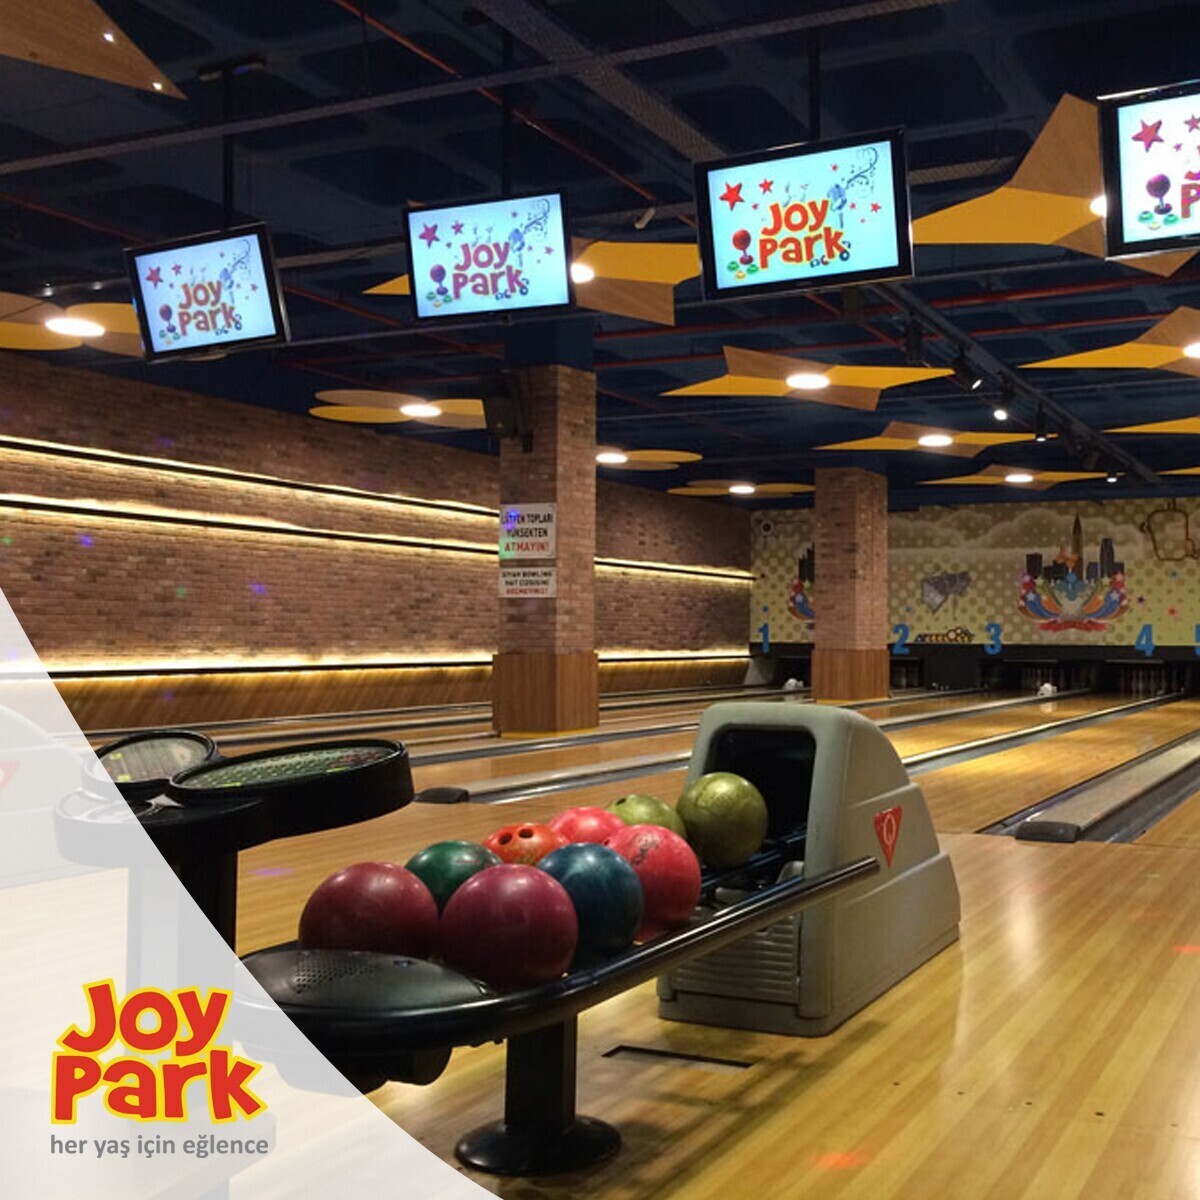 JoyPark İsfanbul AVM Bowling Oyun Biletleri